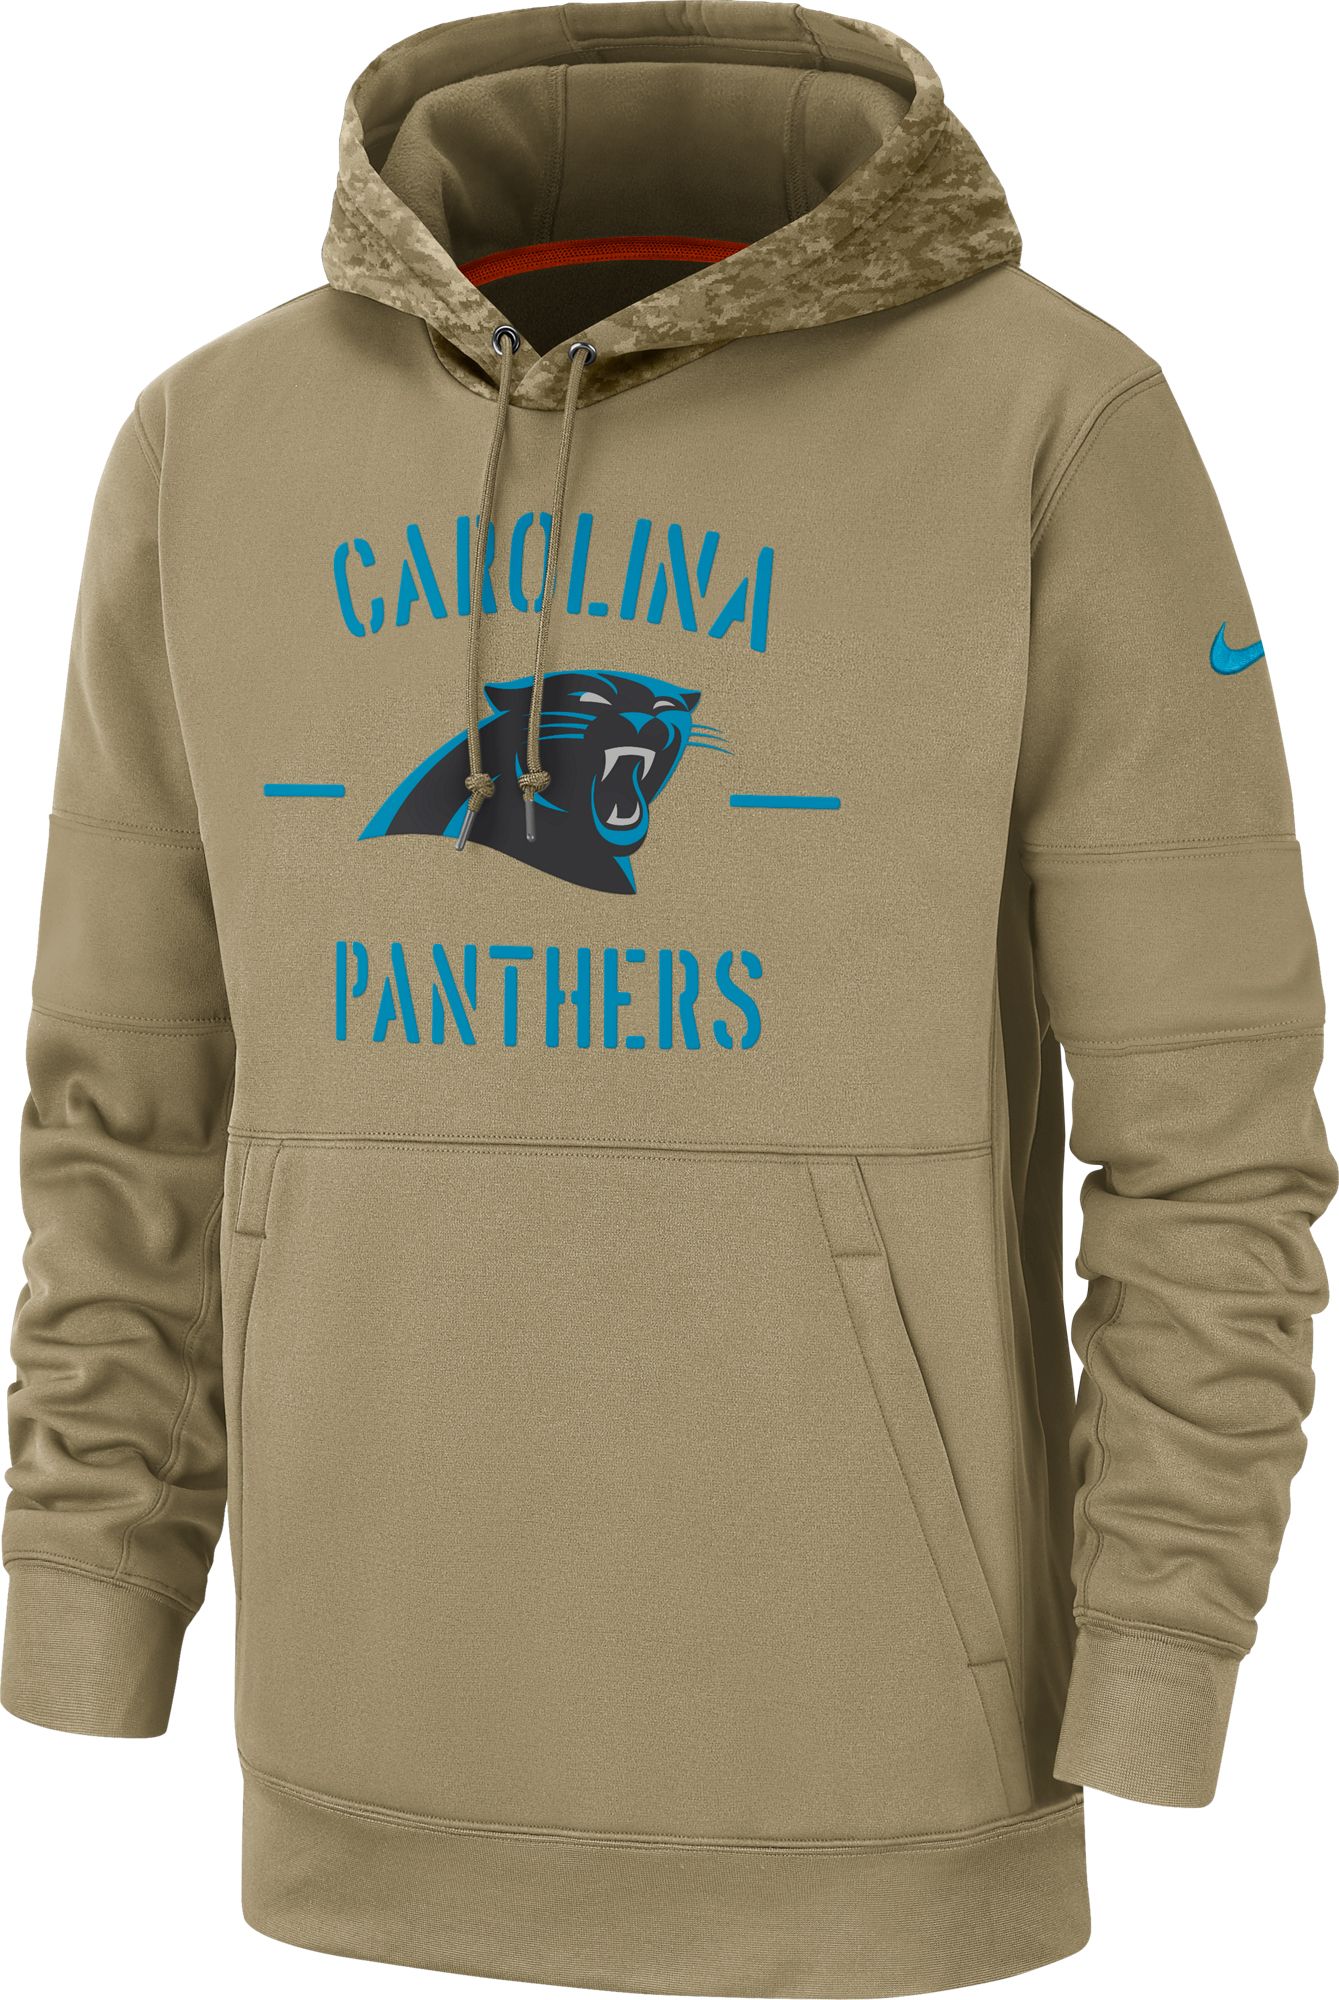 carolina panthers salute hoodie